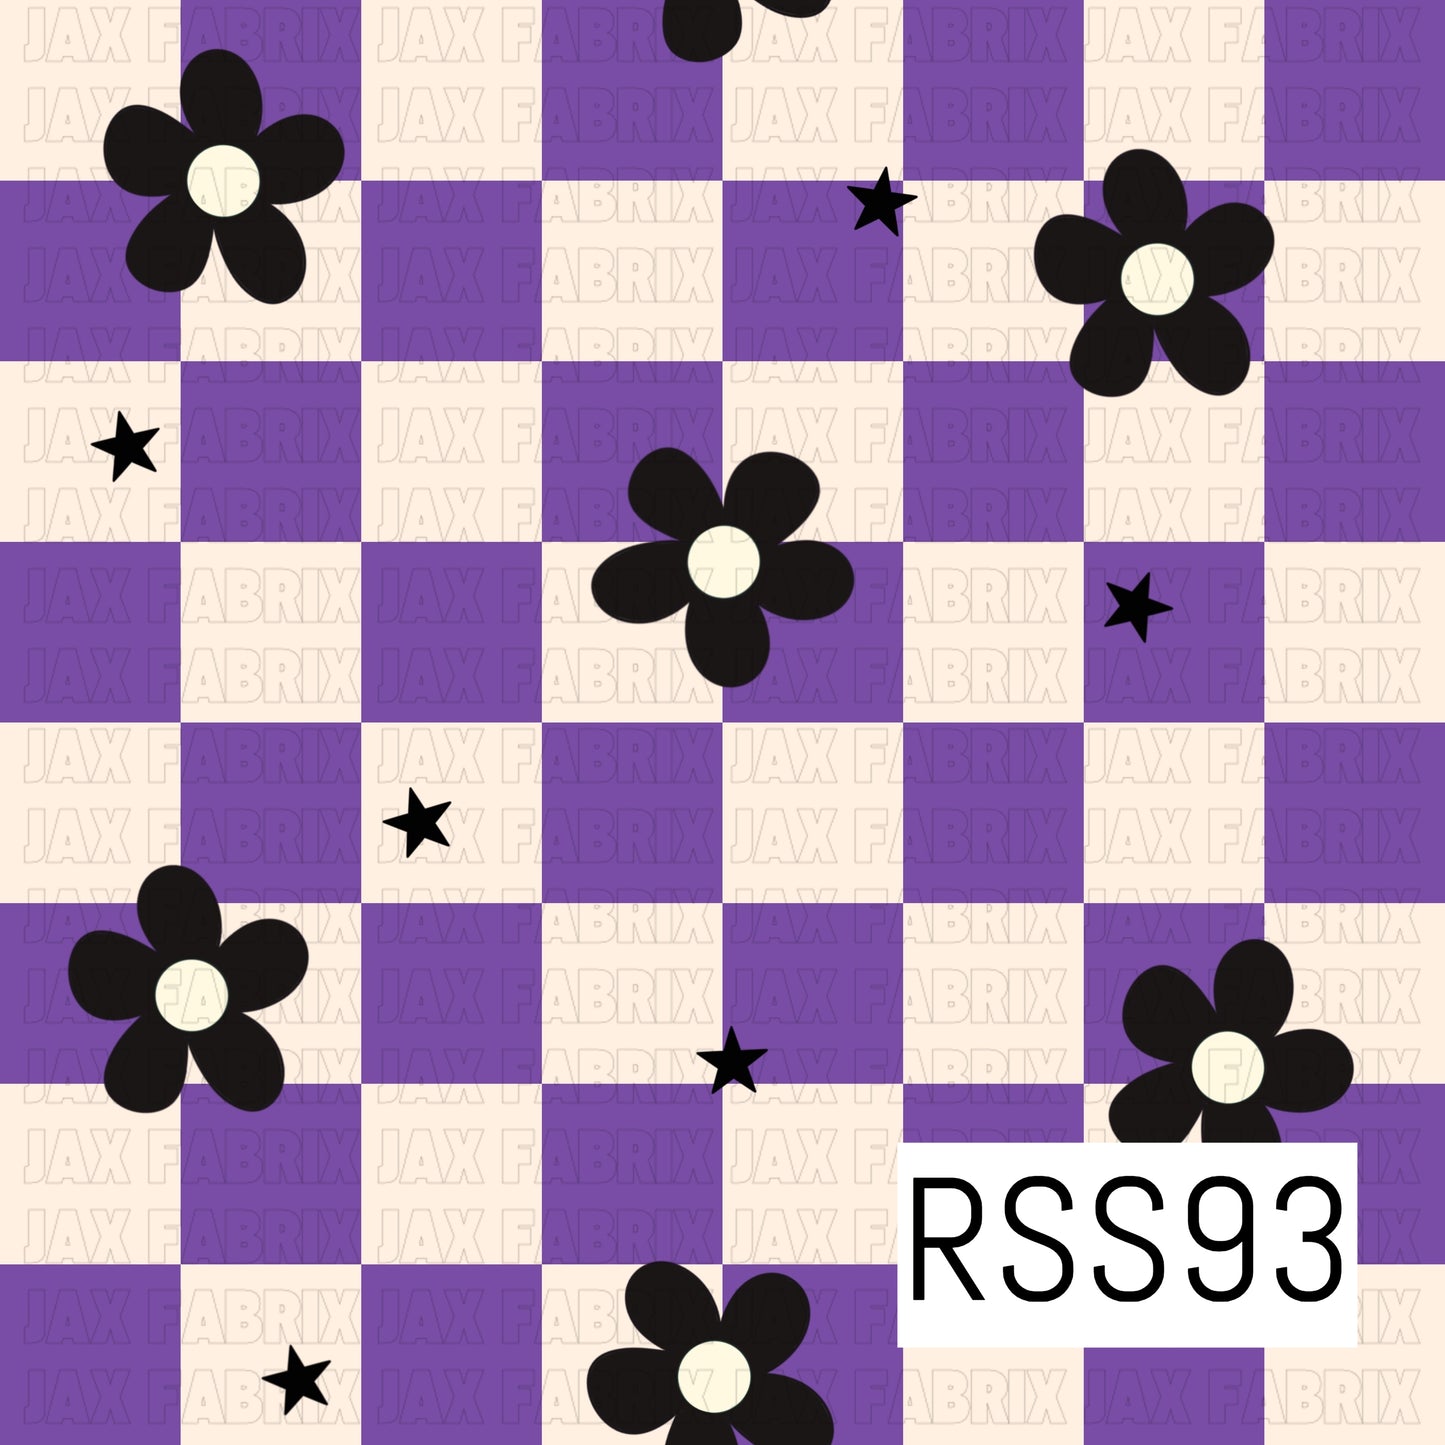 RSS93